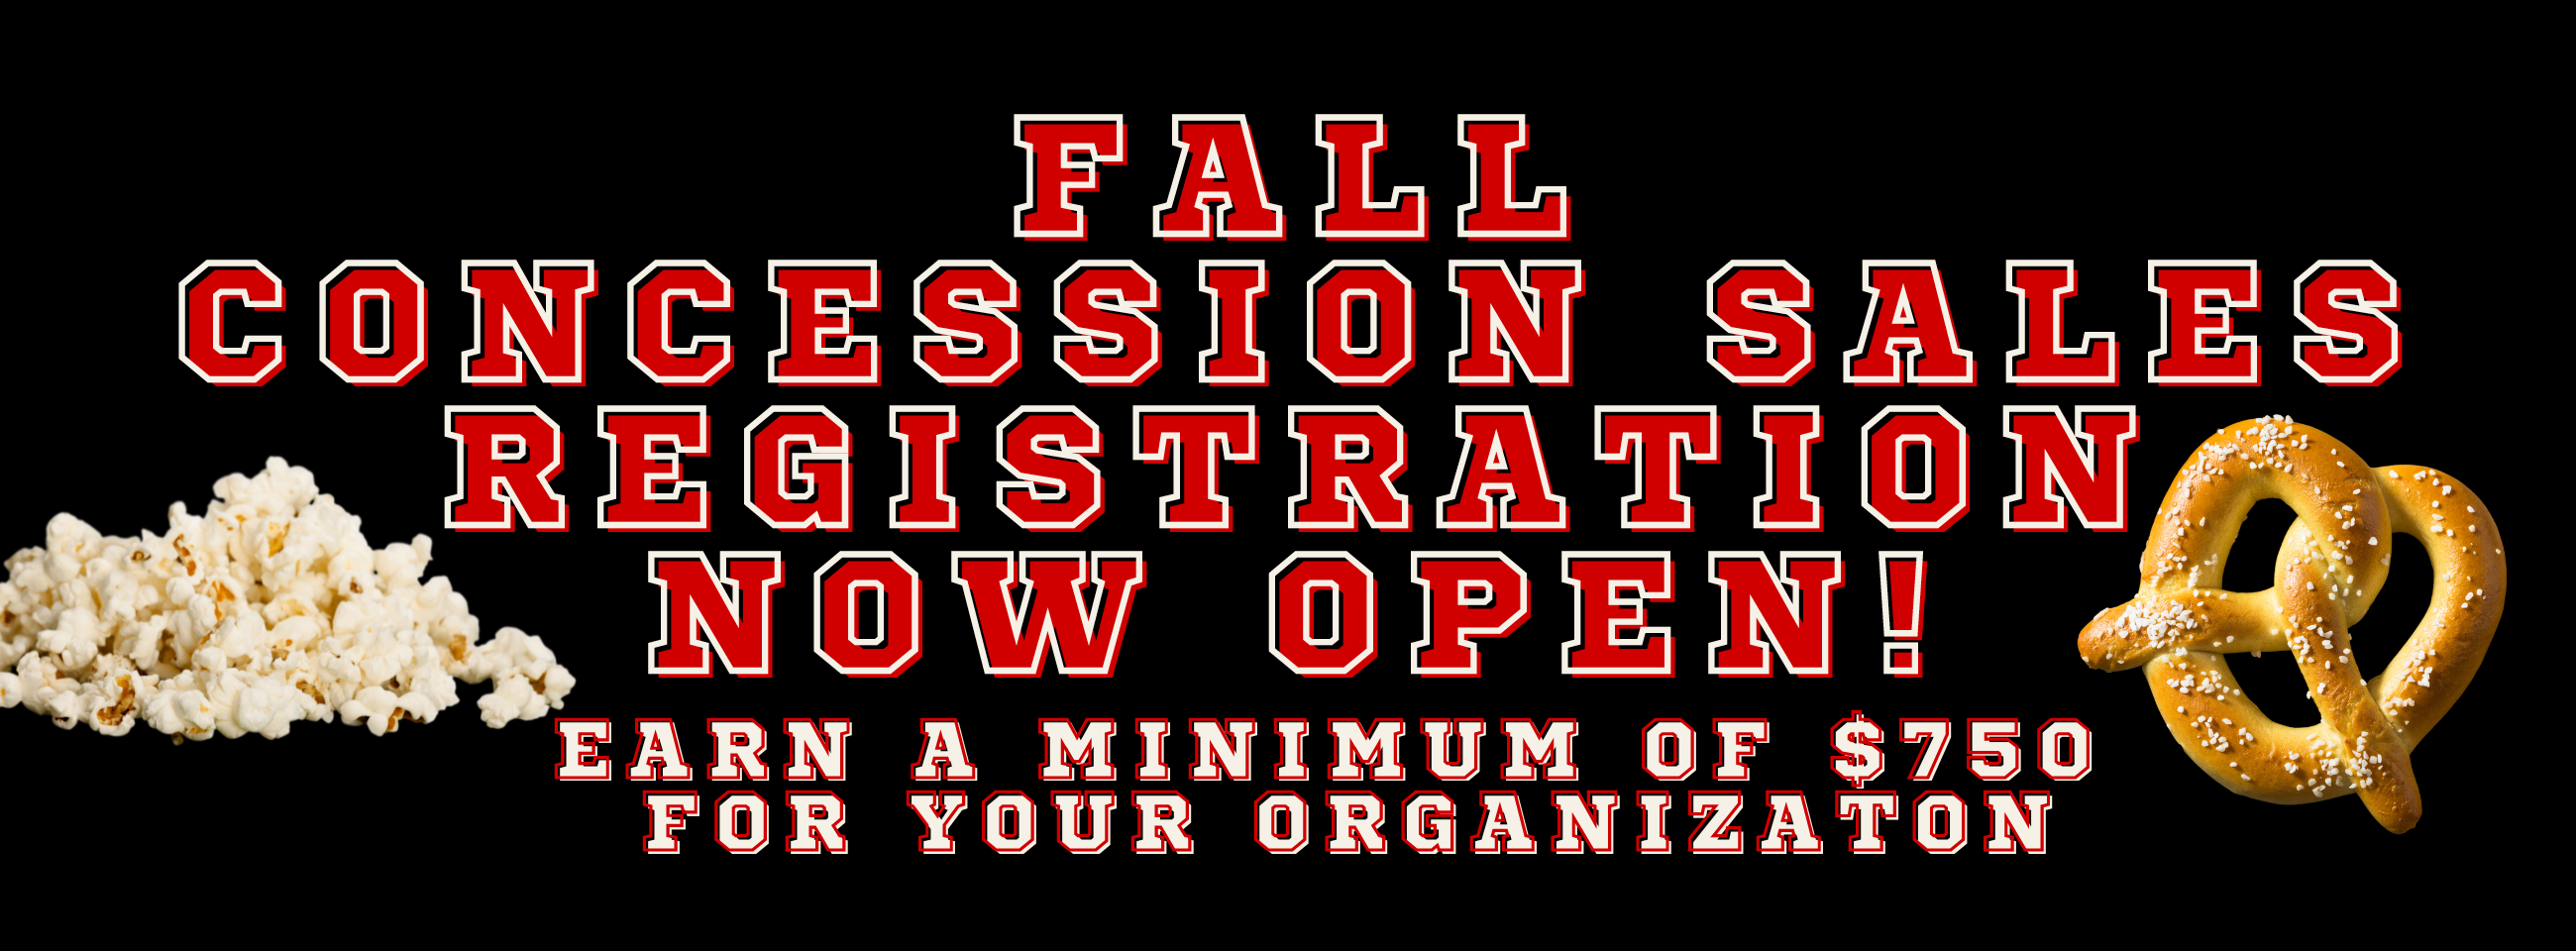 Fall Concession Sales Registration